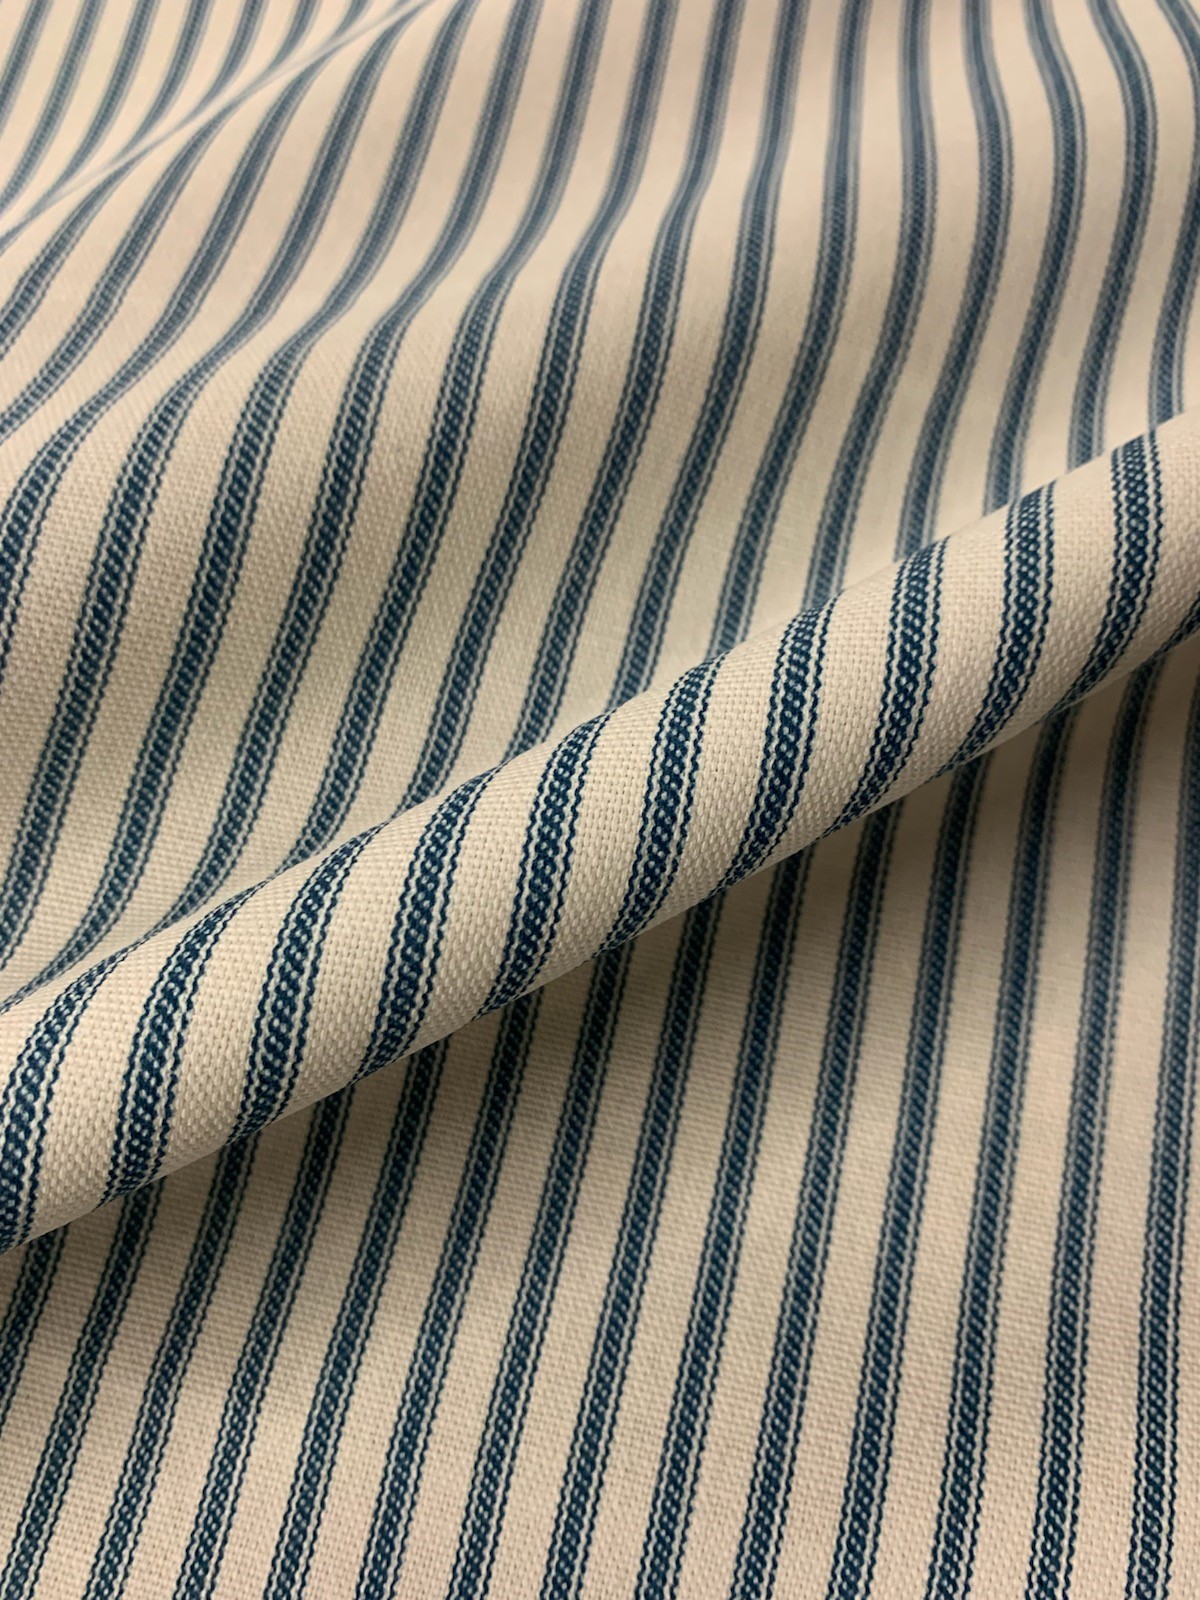 54" Blue Stripe Ticking Fabric - Per Yard